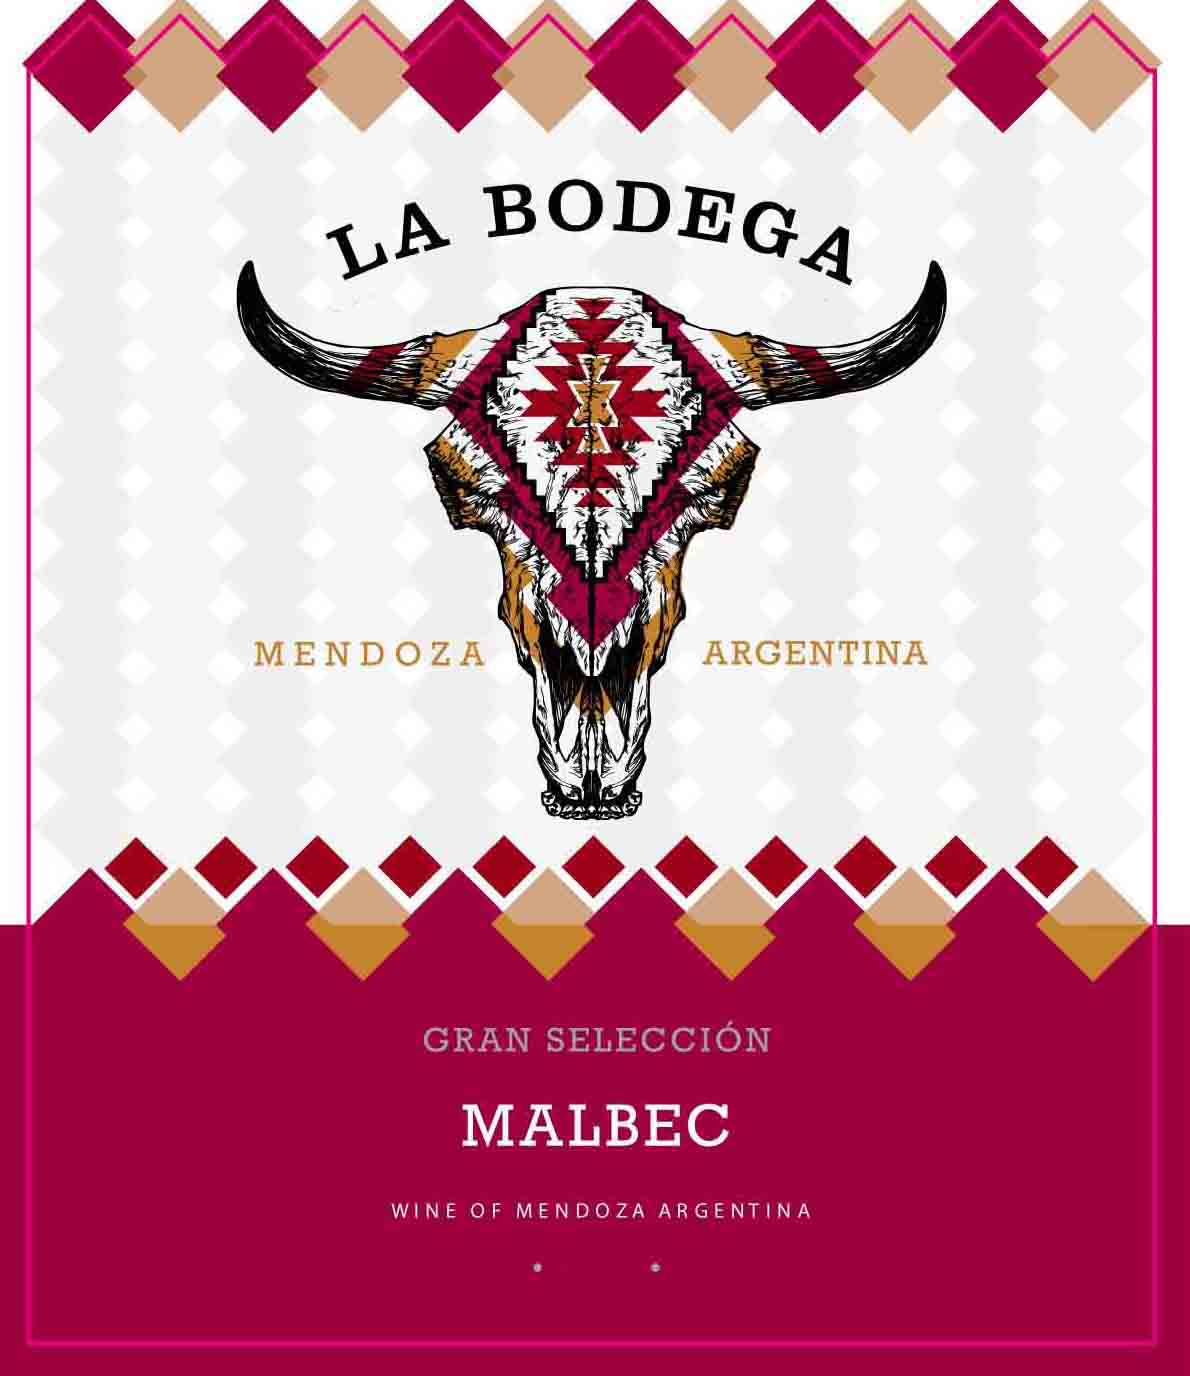 La Bodega - Gran Seleccion Malbec label